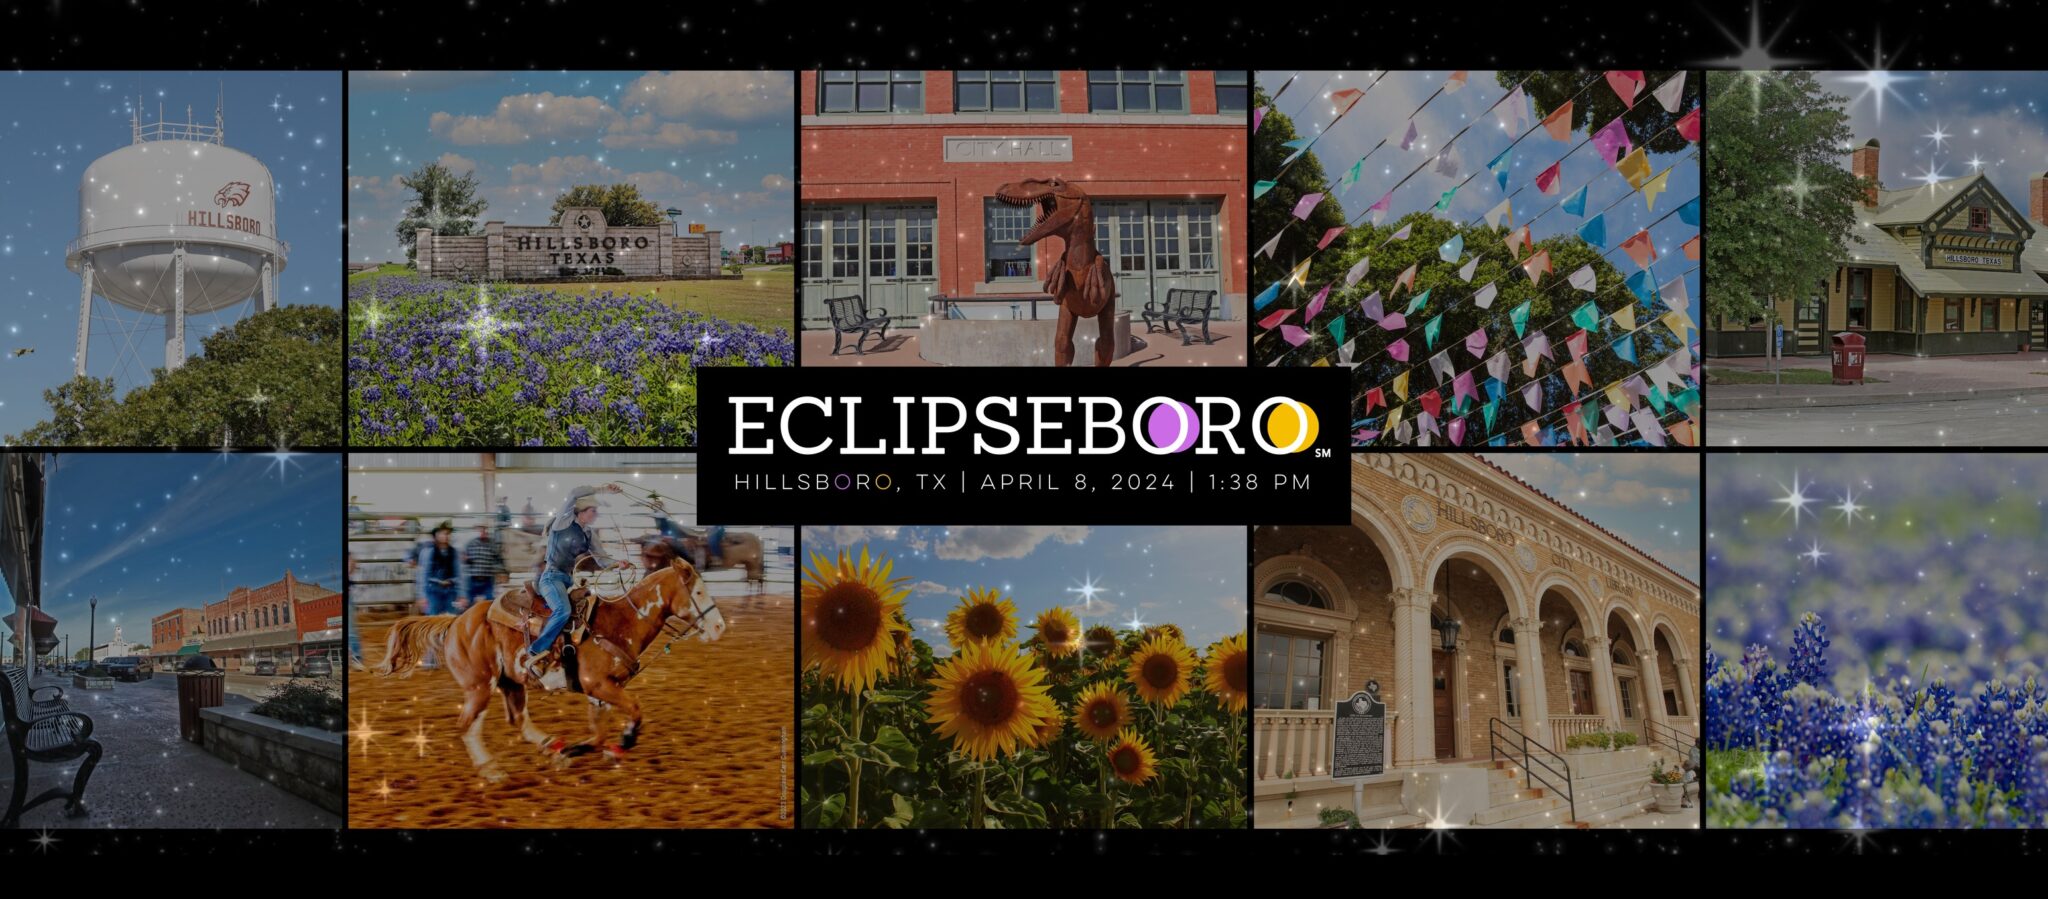 2024 Eclipse in Hillsboro Texas Explore Hillsboro Texas